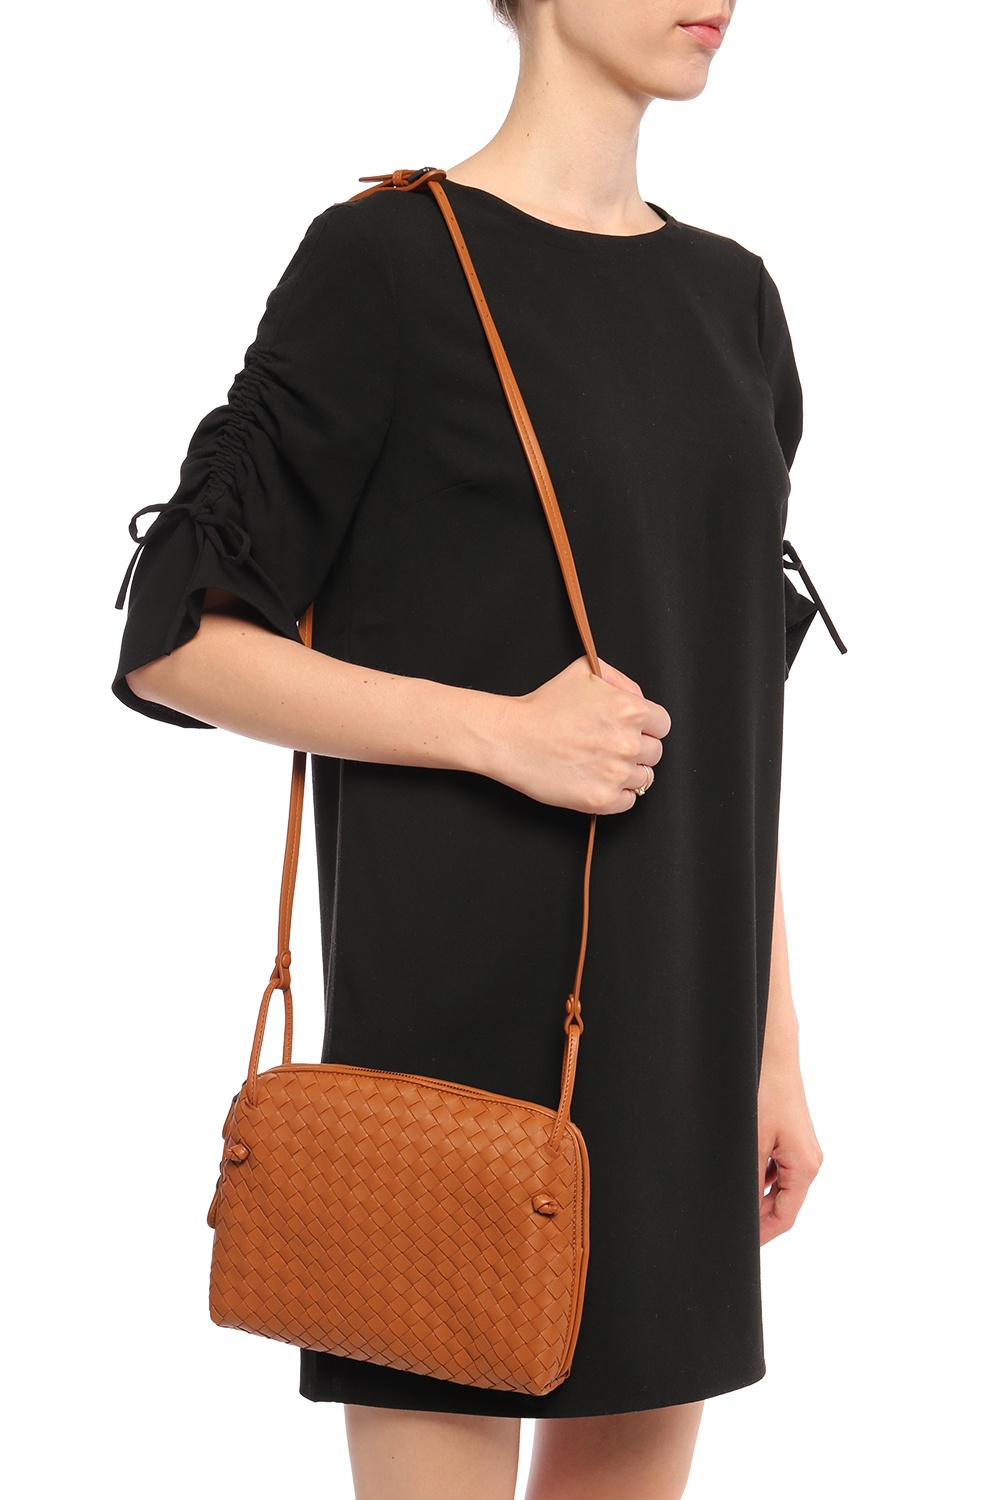 Bottega Veneta 'Nodini' leather shoulder bag, Women's Bags